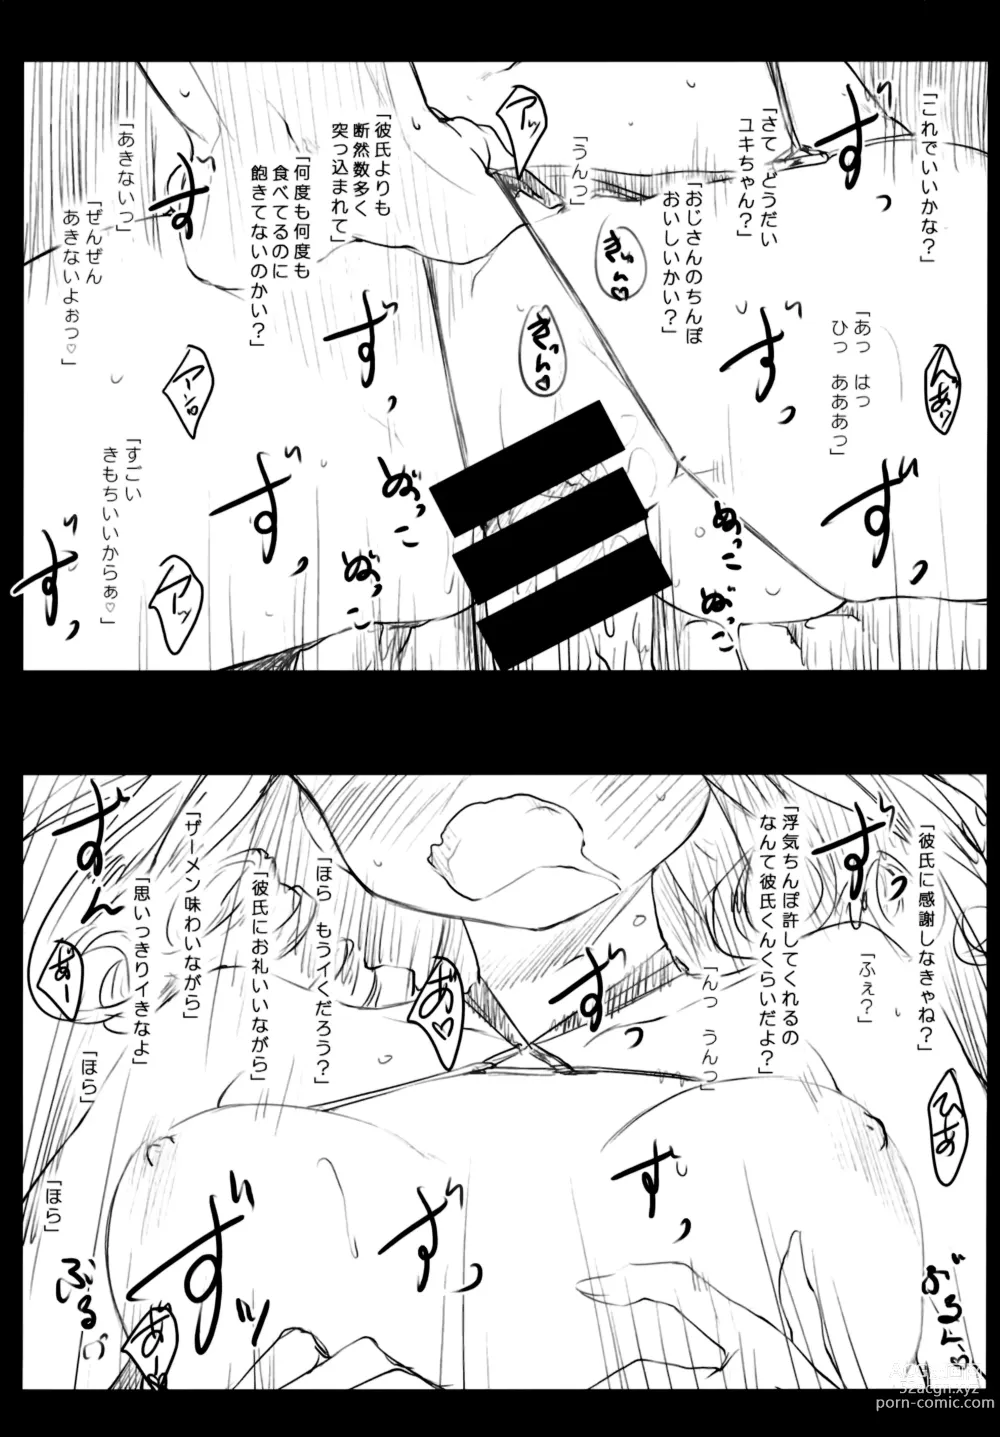 Page 7 of manga MISDIRECTION Toranoana Gentei Shousasshi